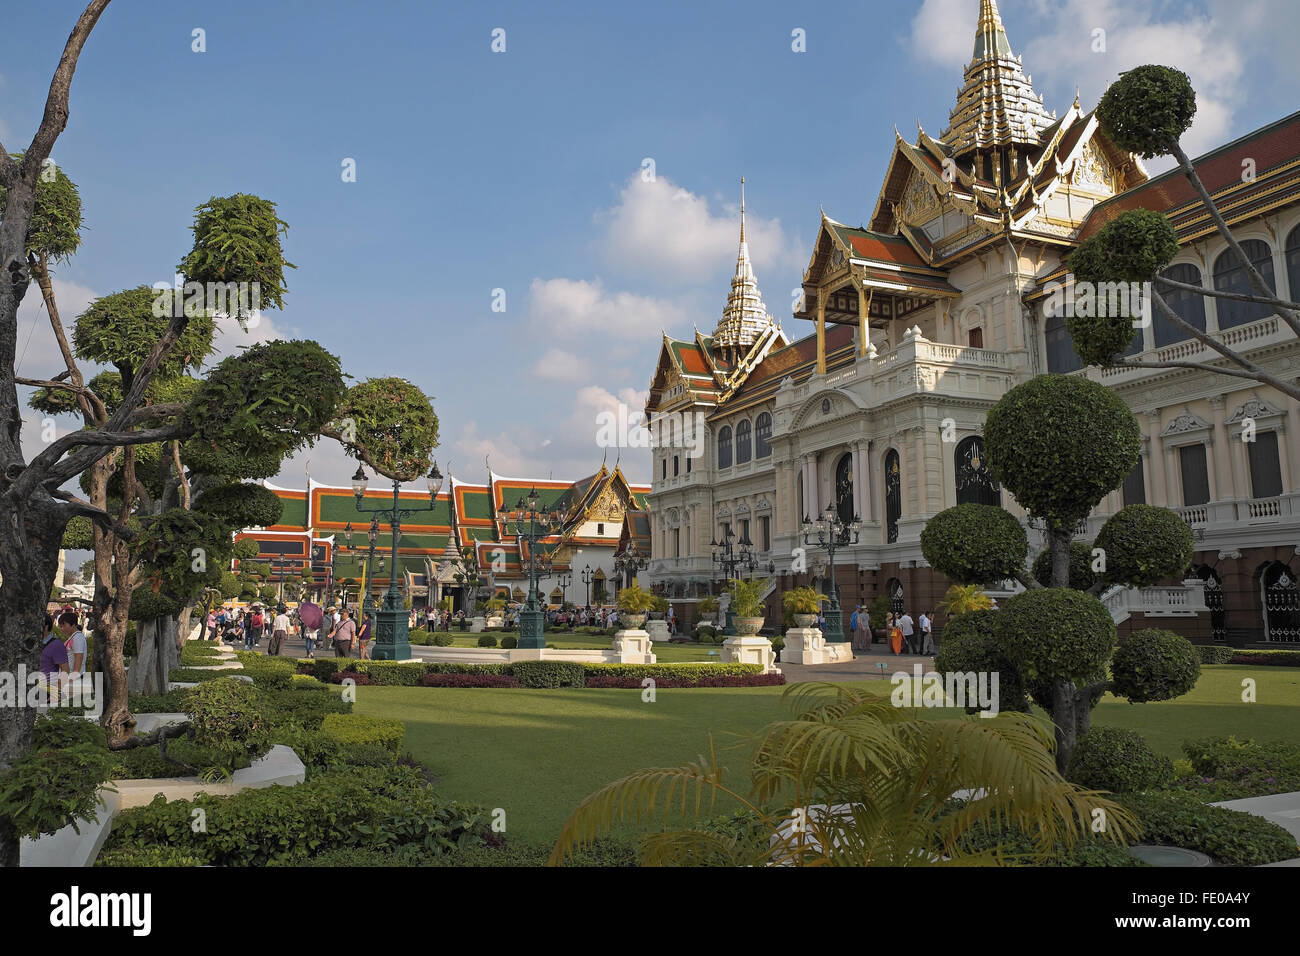 Pollarded trees and lawns, with Chakri Maha Prasat Hall, The Grand Palace, Bangkok, Thailand, Asia. Stock Photo